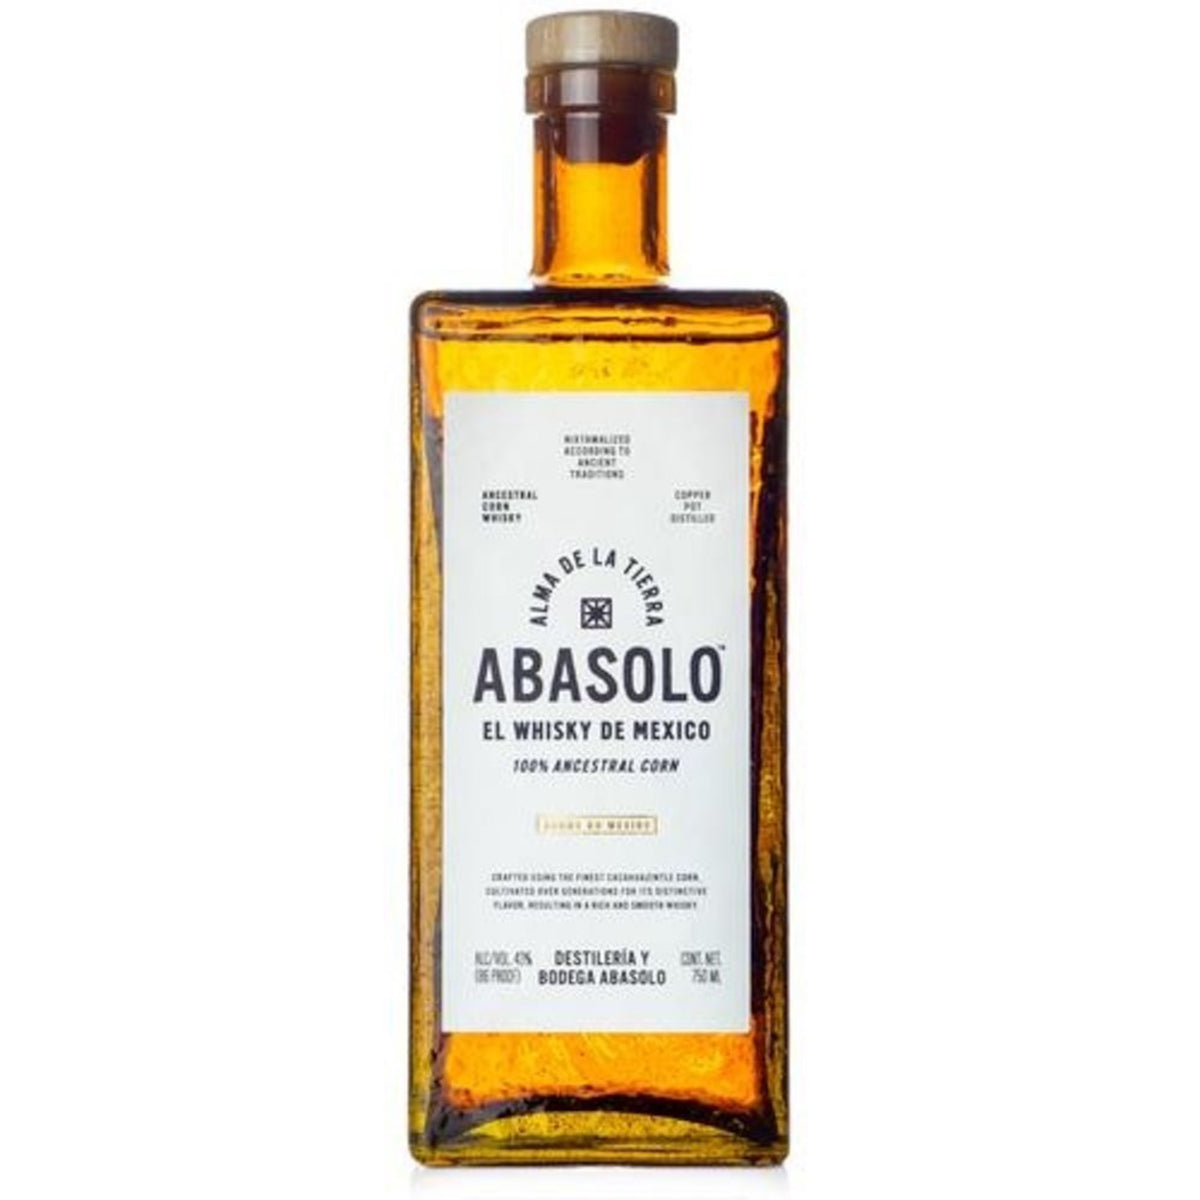 Ramirez Beverage Center - Abasolo El Whisky de México is crafted